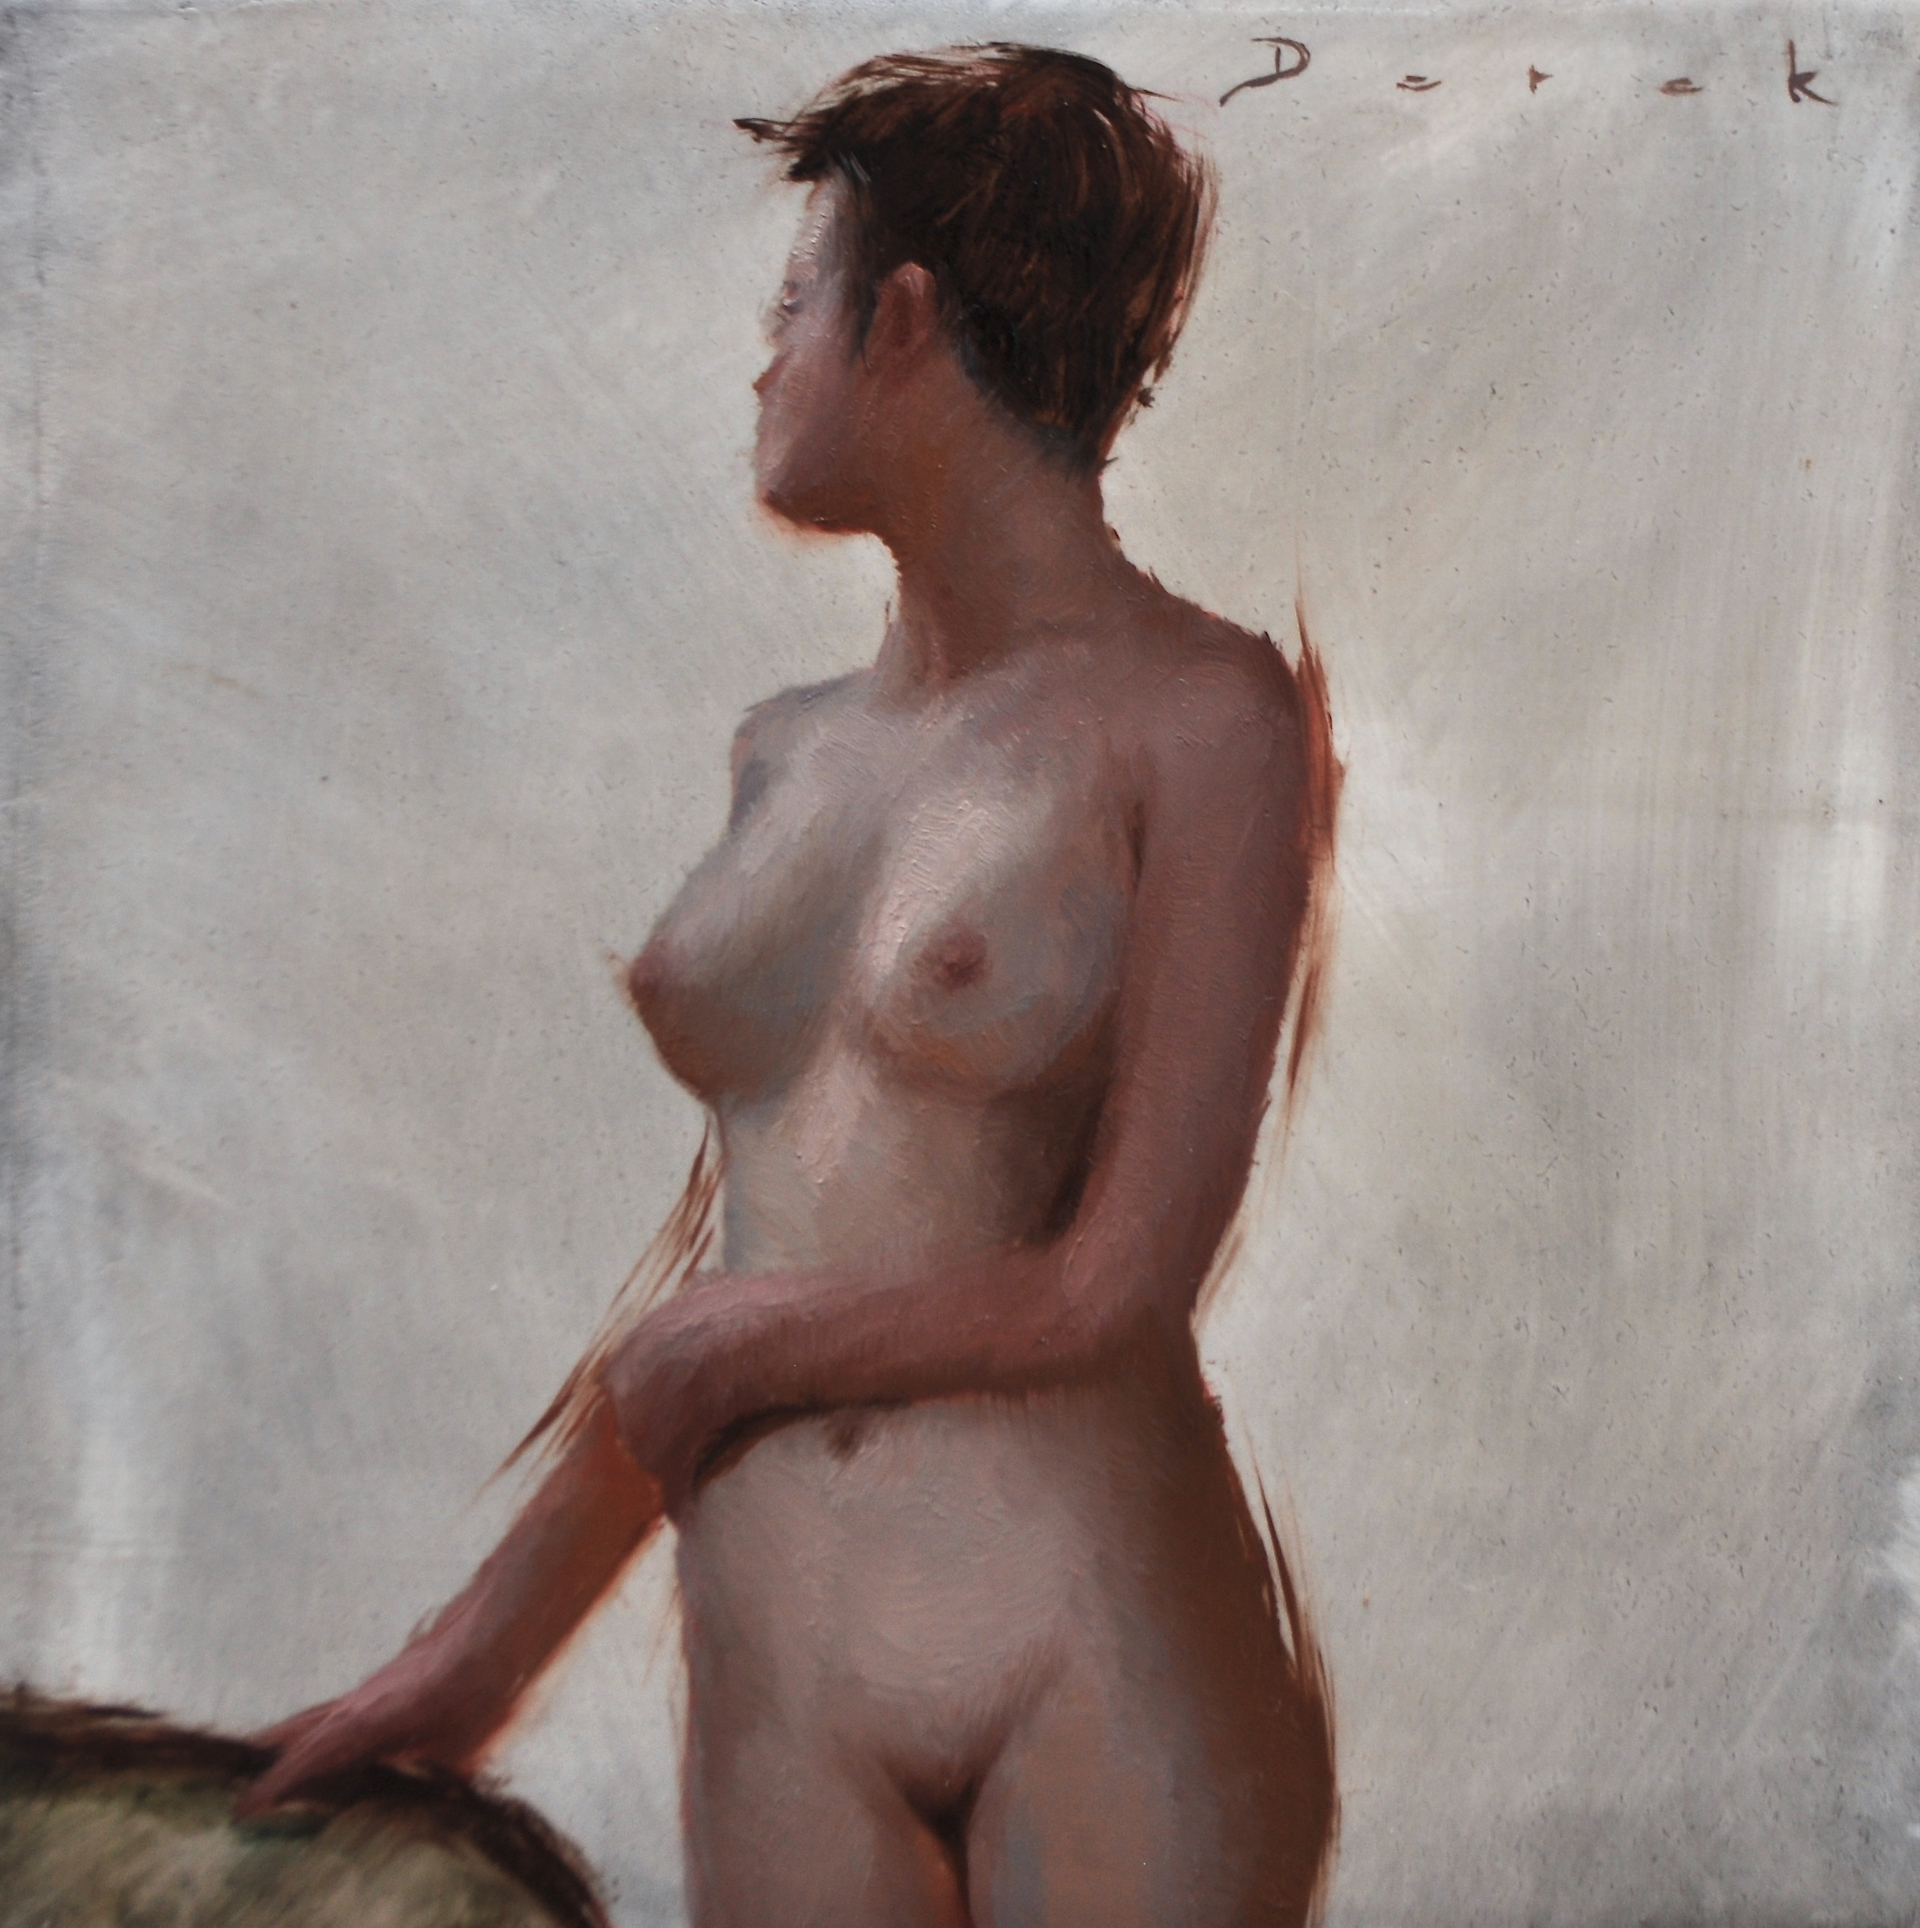 Derek Harrison - Standing Figure front Oil on wood panel 5 x 5 in $500.00